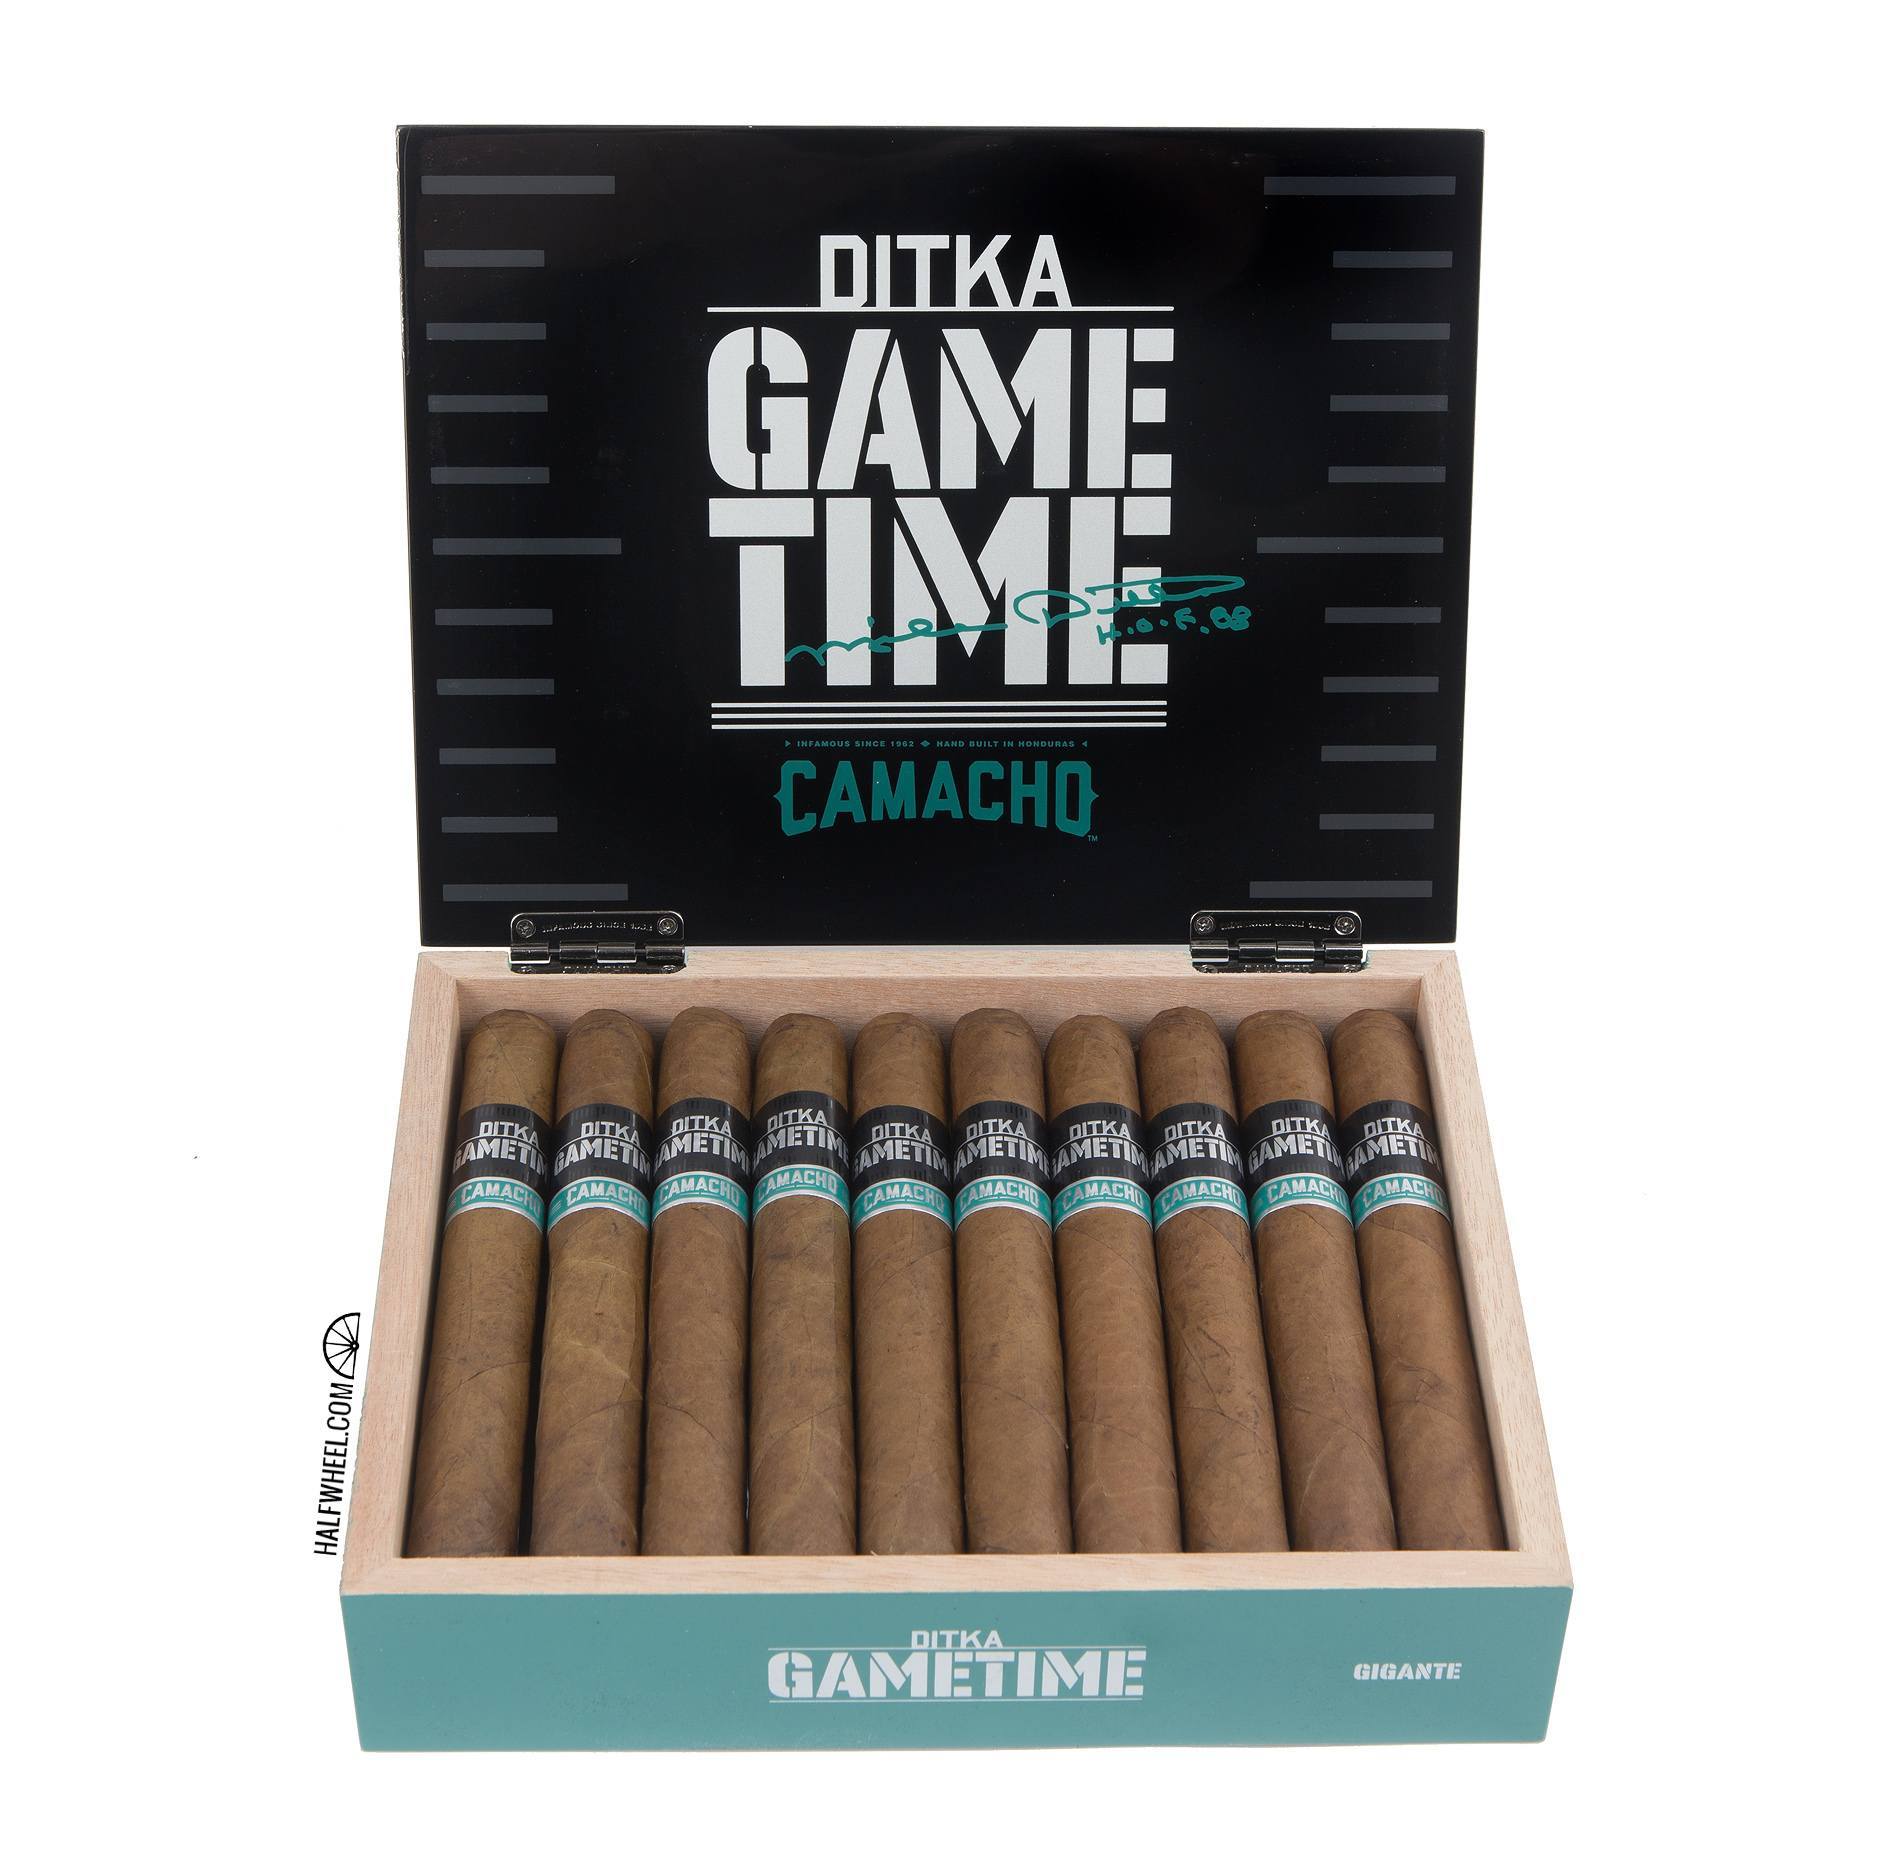 Ditka Gametime by Camacho Box 2